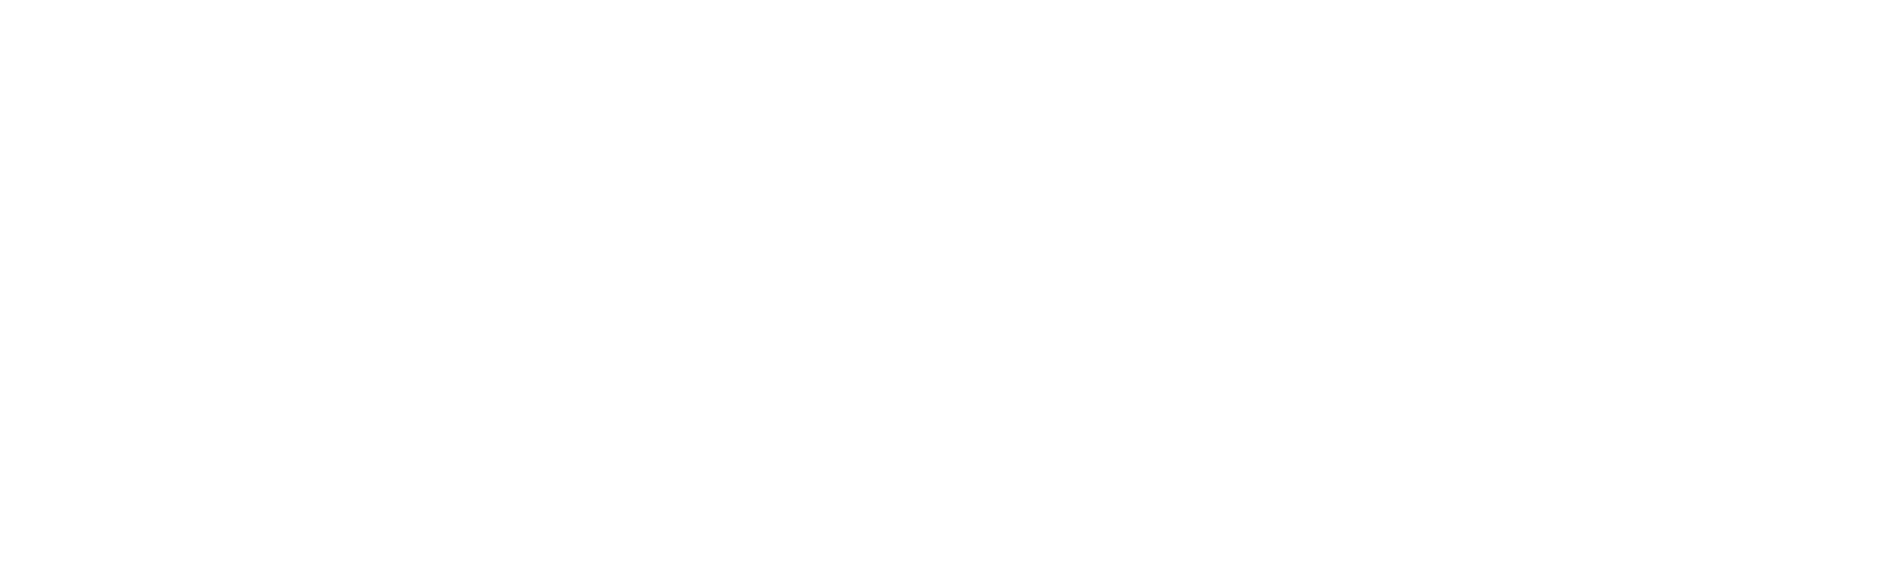 REMAX Professionals North Brokerage